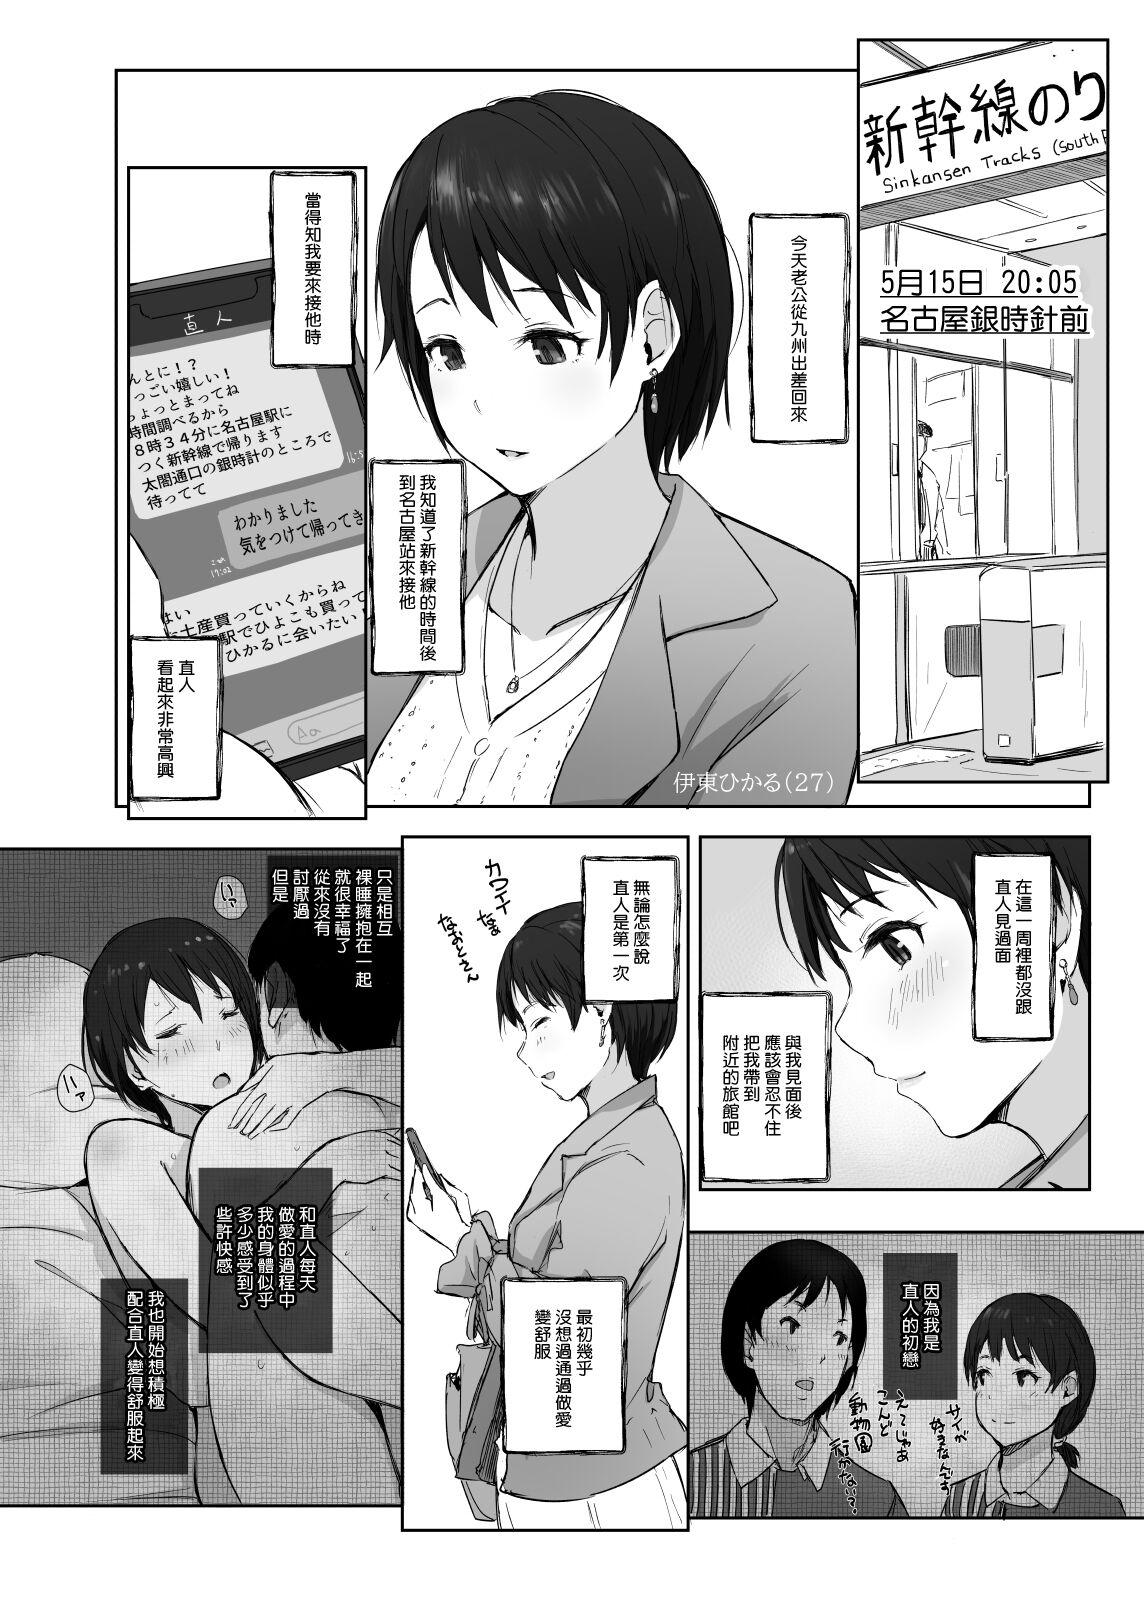 Student Saikou ni Tabegoro no Yoru - I made her mine last night. - Original Blackmail - Page 5